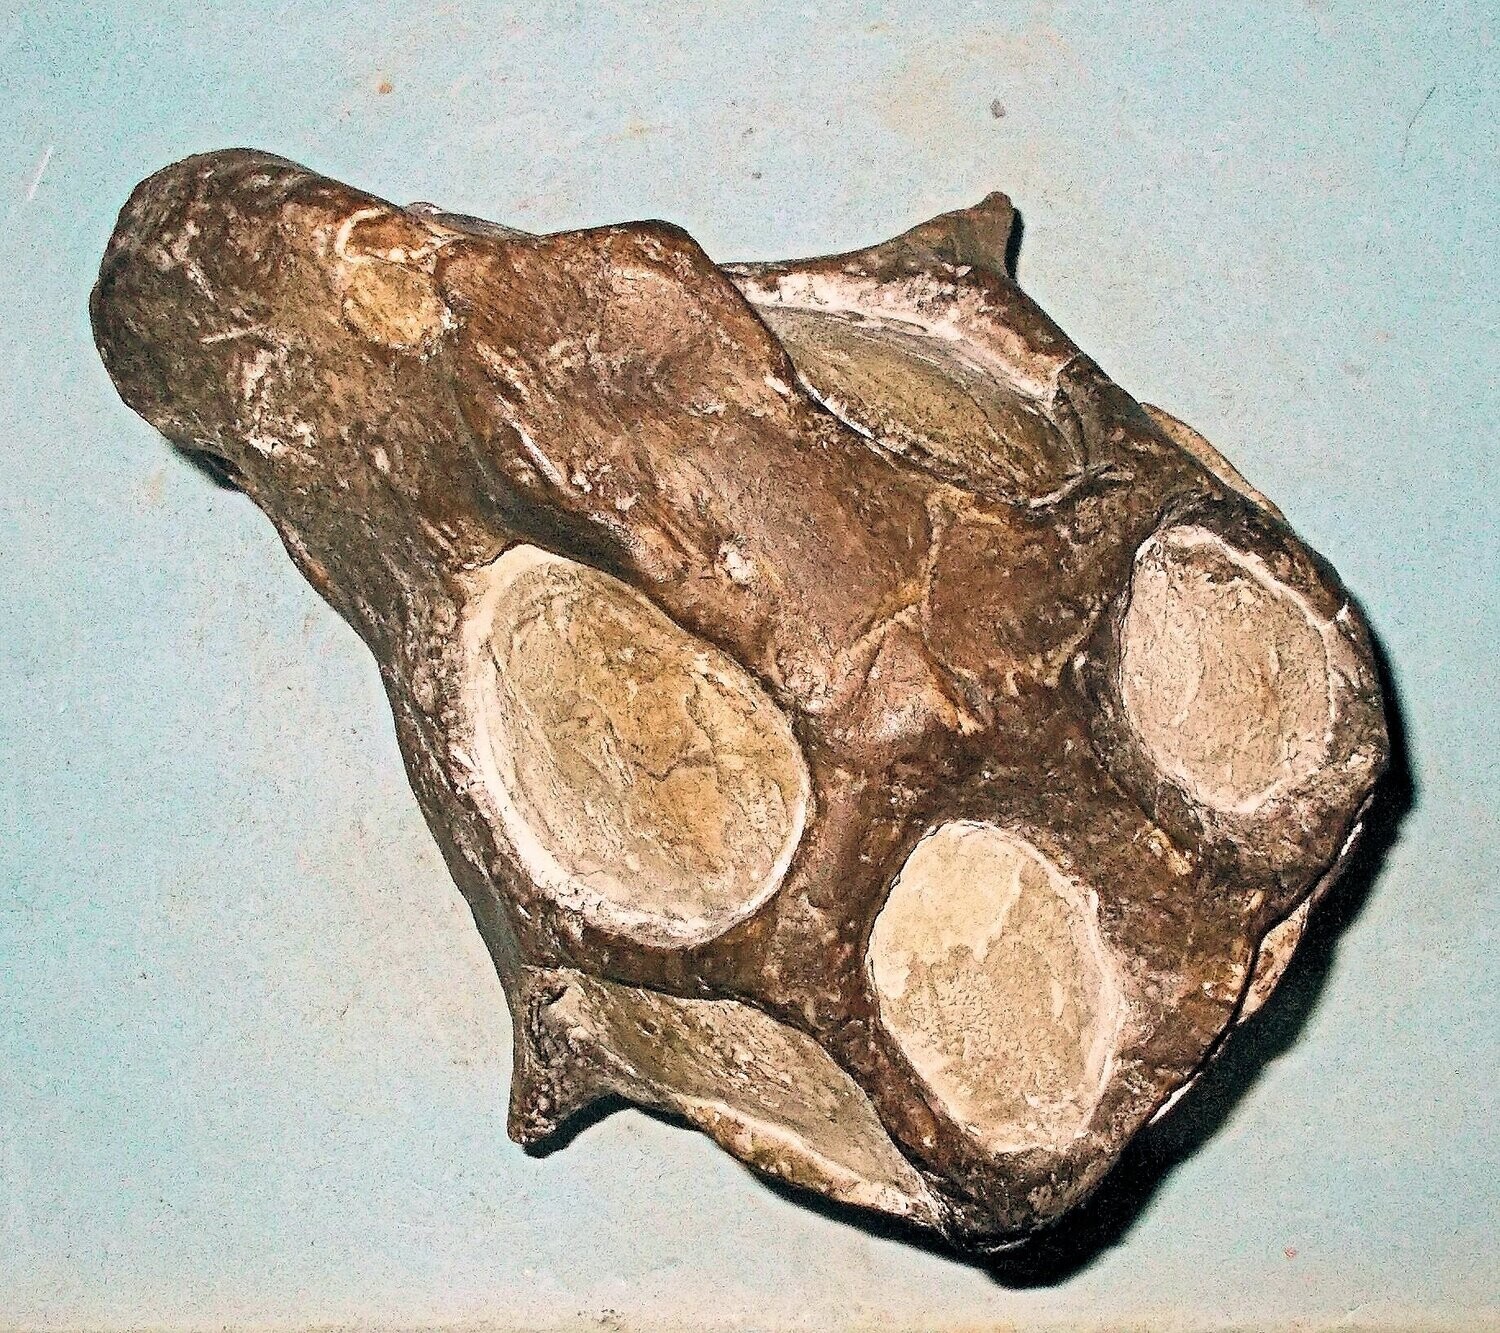 Fine 15cm X 12cm skull of Psittacosaurus mazongshensis  Yu 1997, from the Lower Xinminbao Formation of Ganzu Province, China.